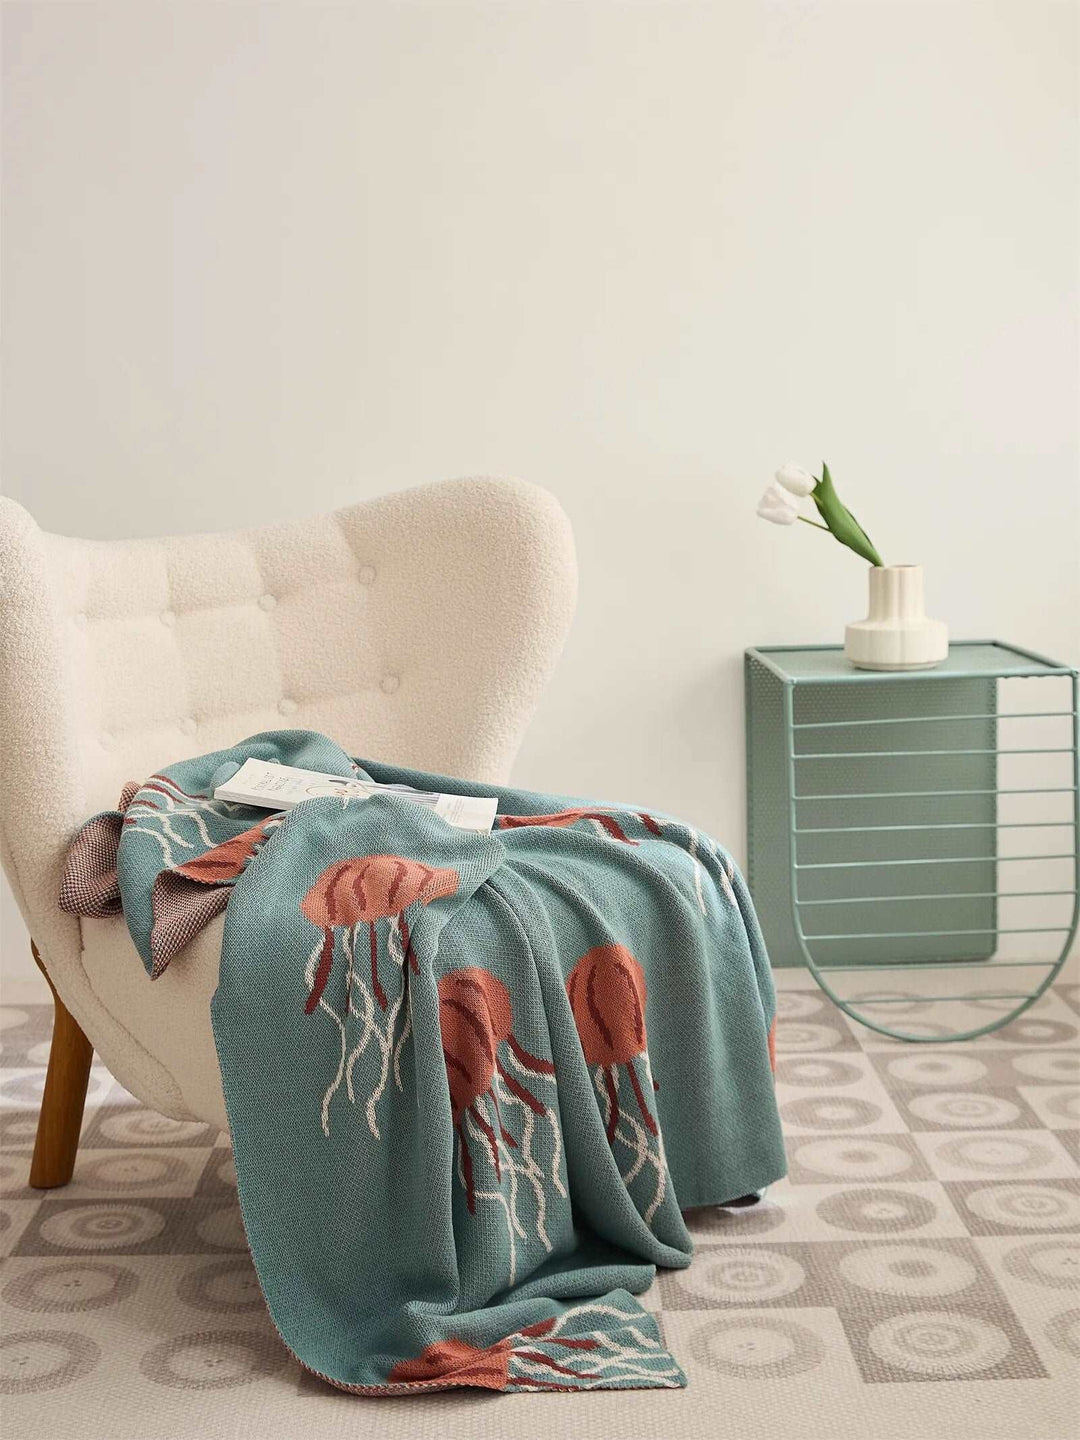 Jellyfish Pattern Blanket + Pillows itsdecorszn